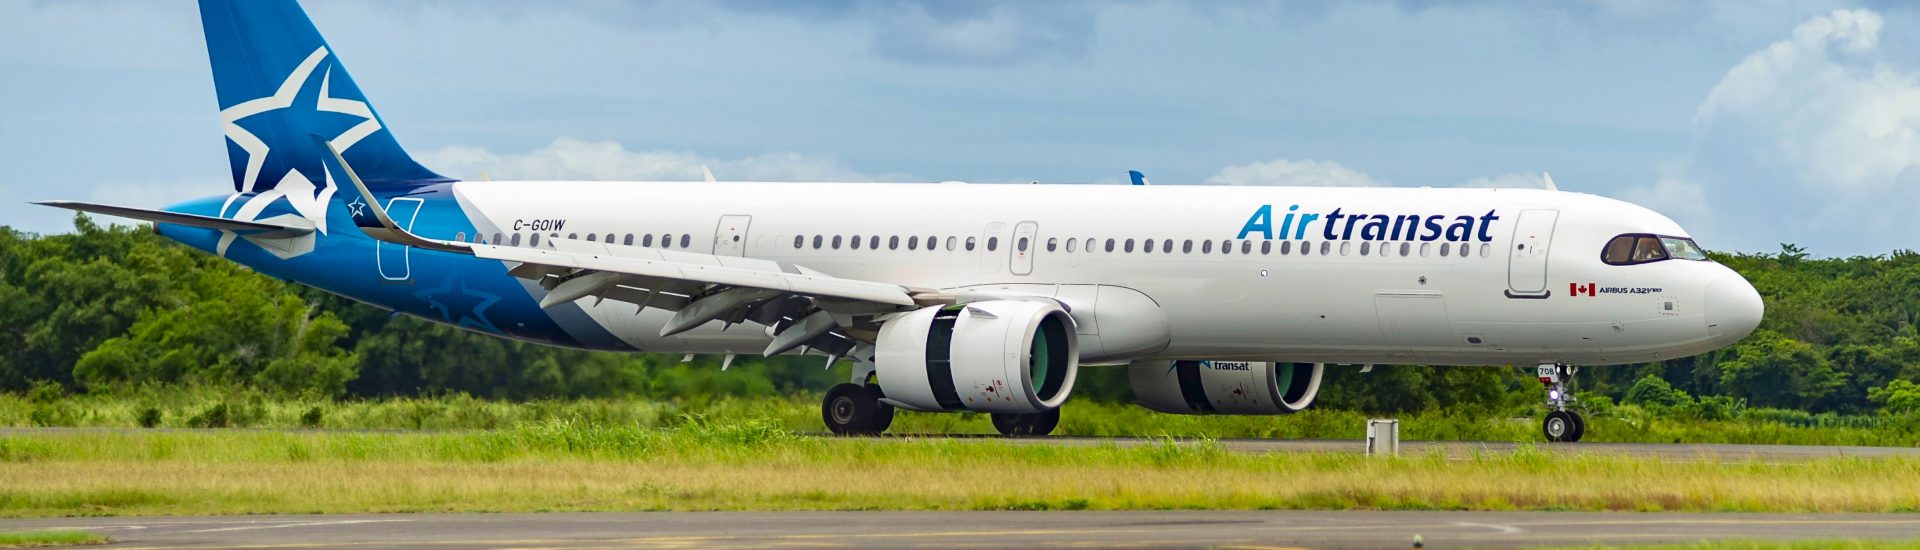 A321-200 Air Transat C-GOIW